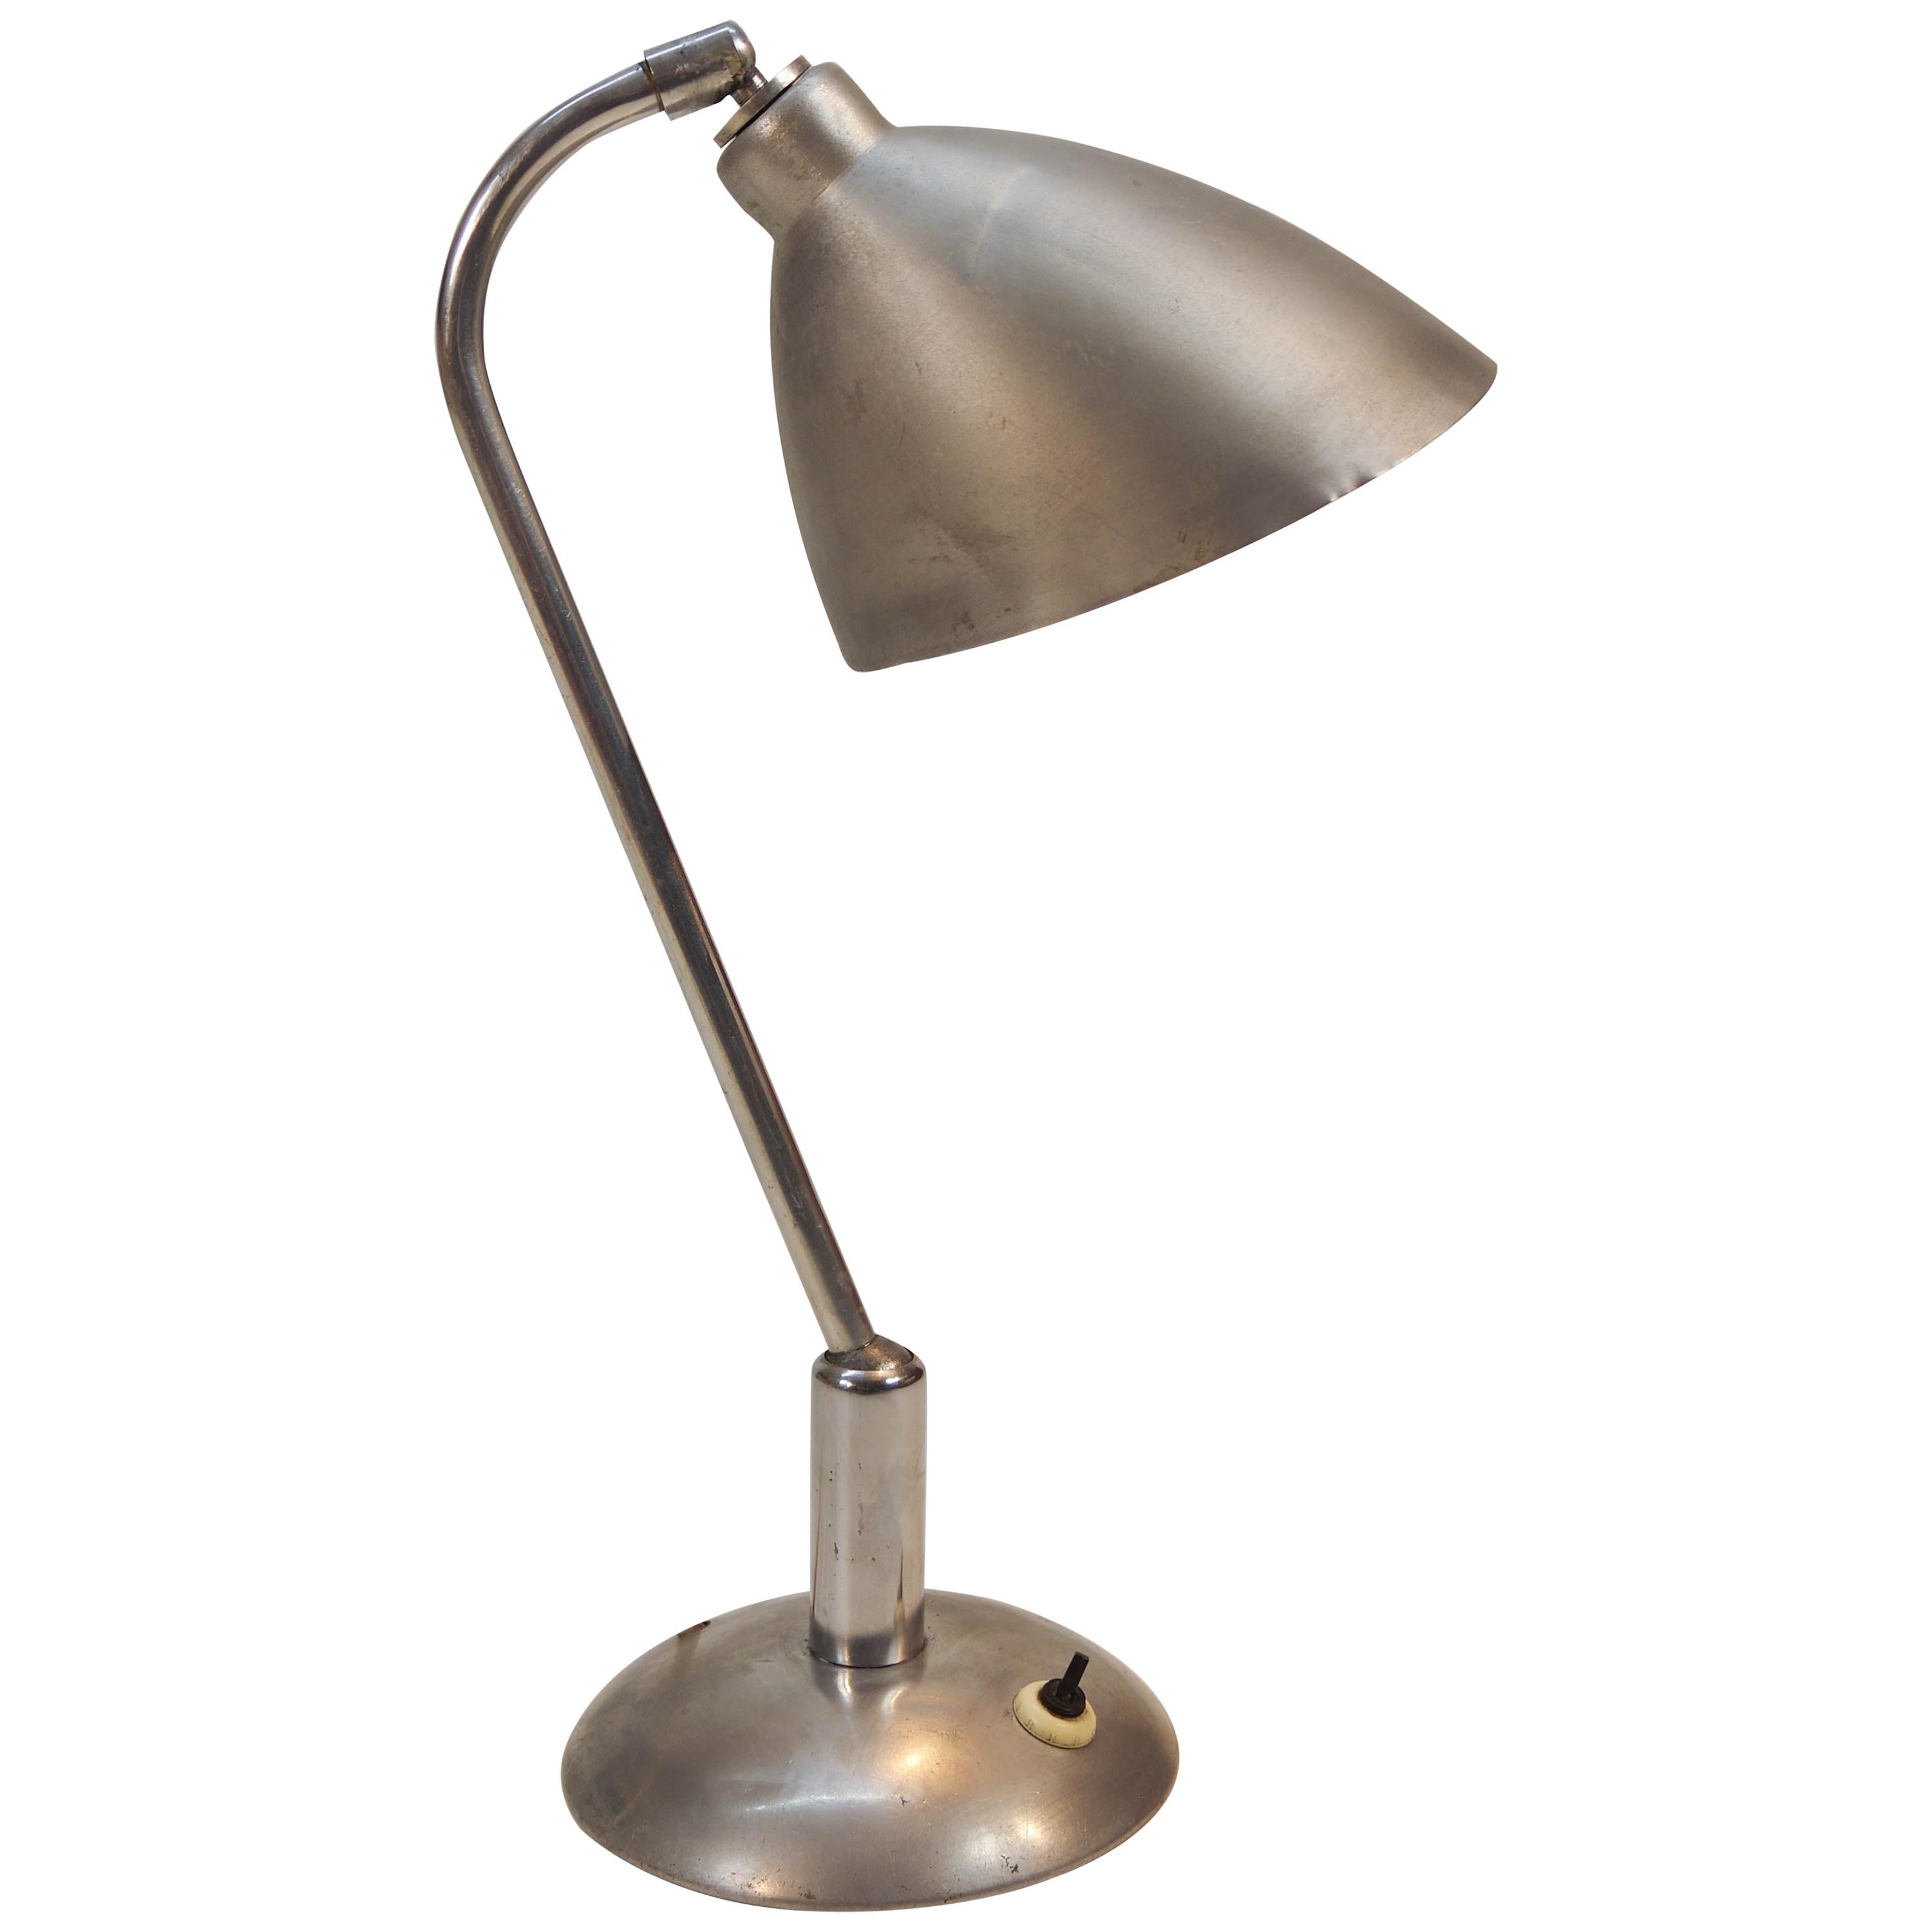 Rare Table Lamp by Franta Anyz, 1930s